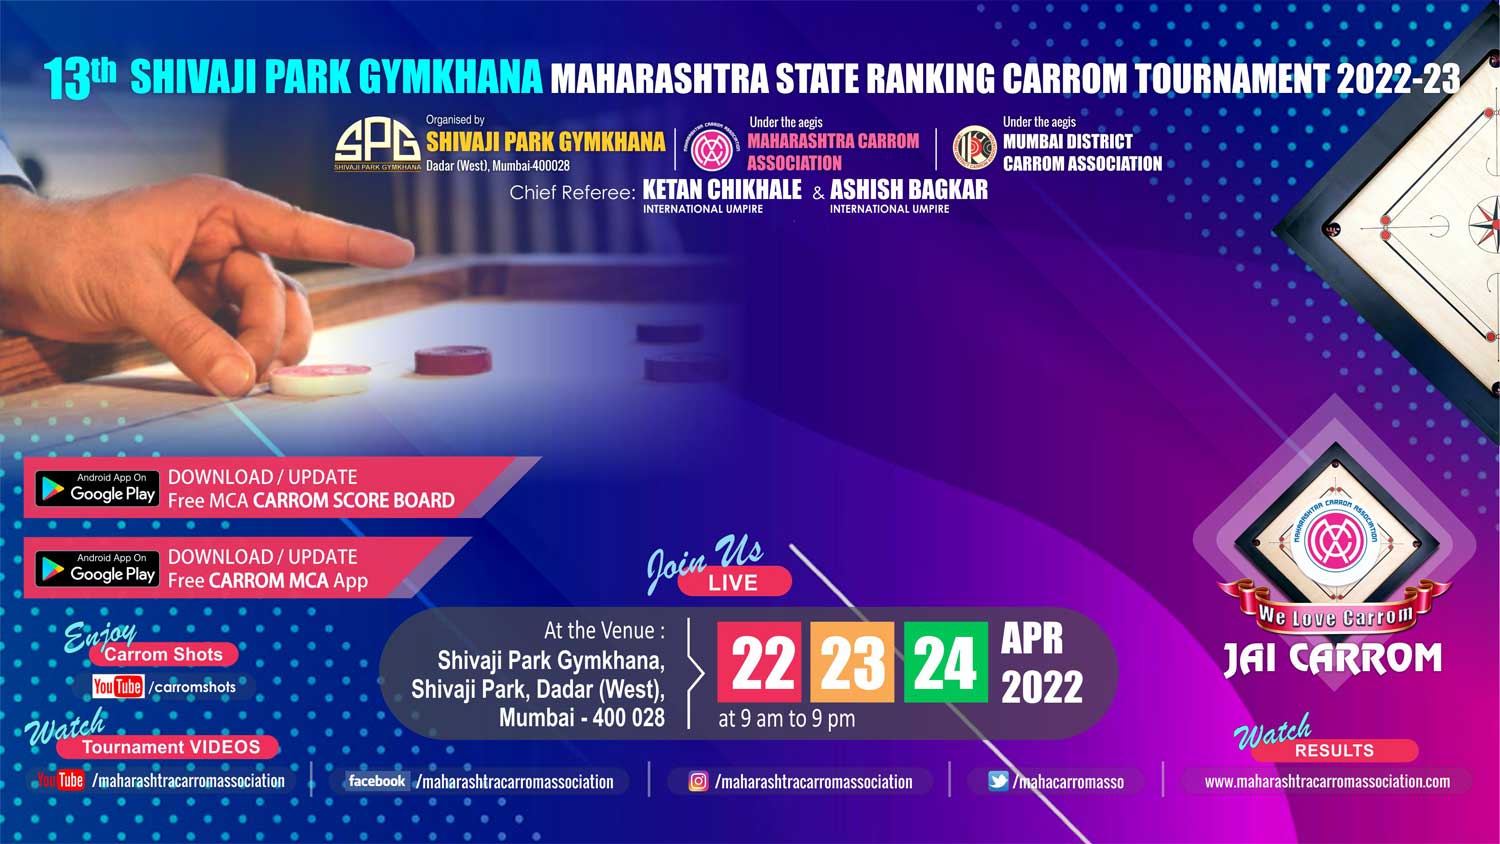 13th Shivaji Park Gymkhana Maharashtra State Ranking Carrom Tournament 2022-23